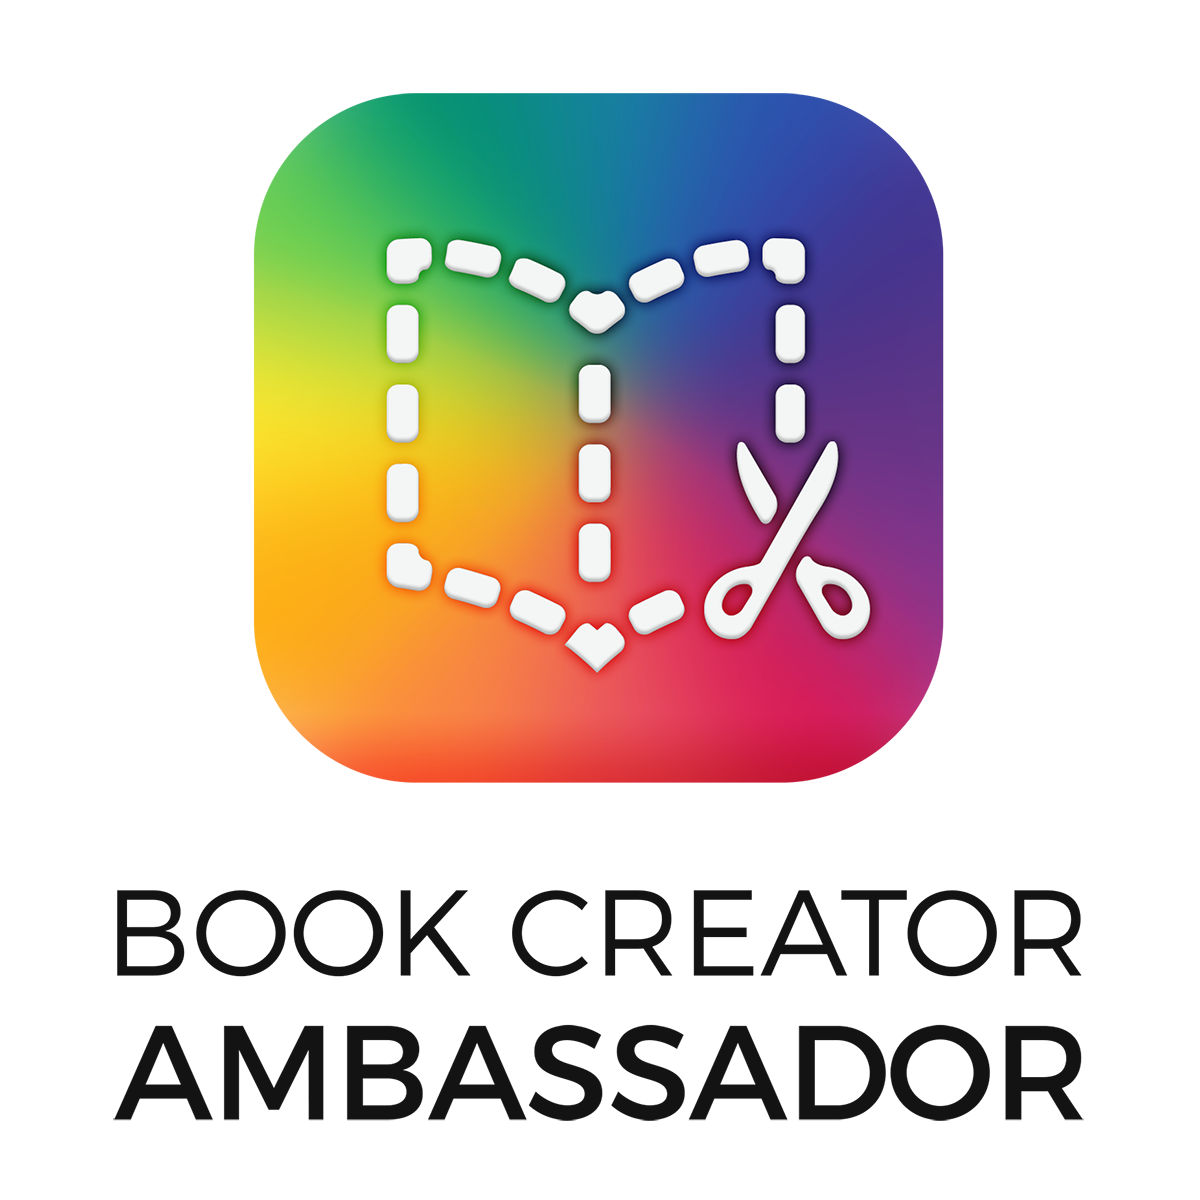 Book Creator Ambassador